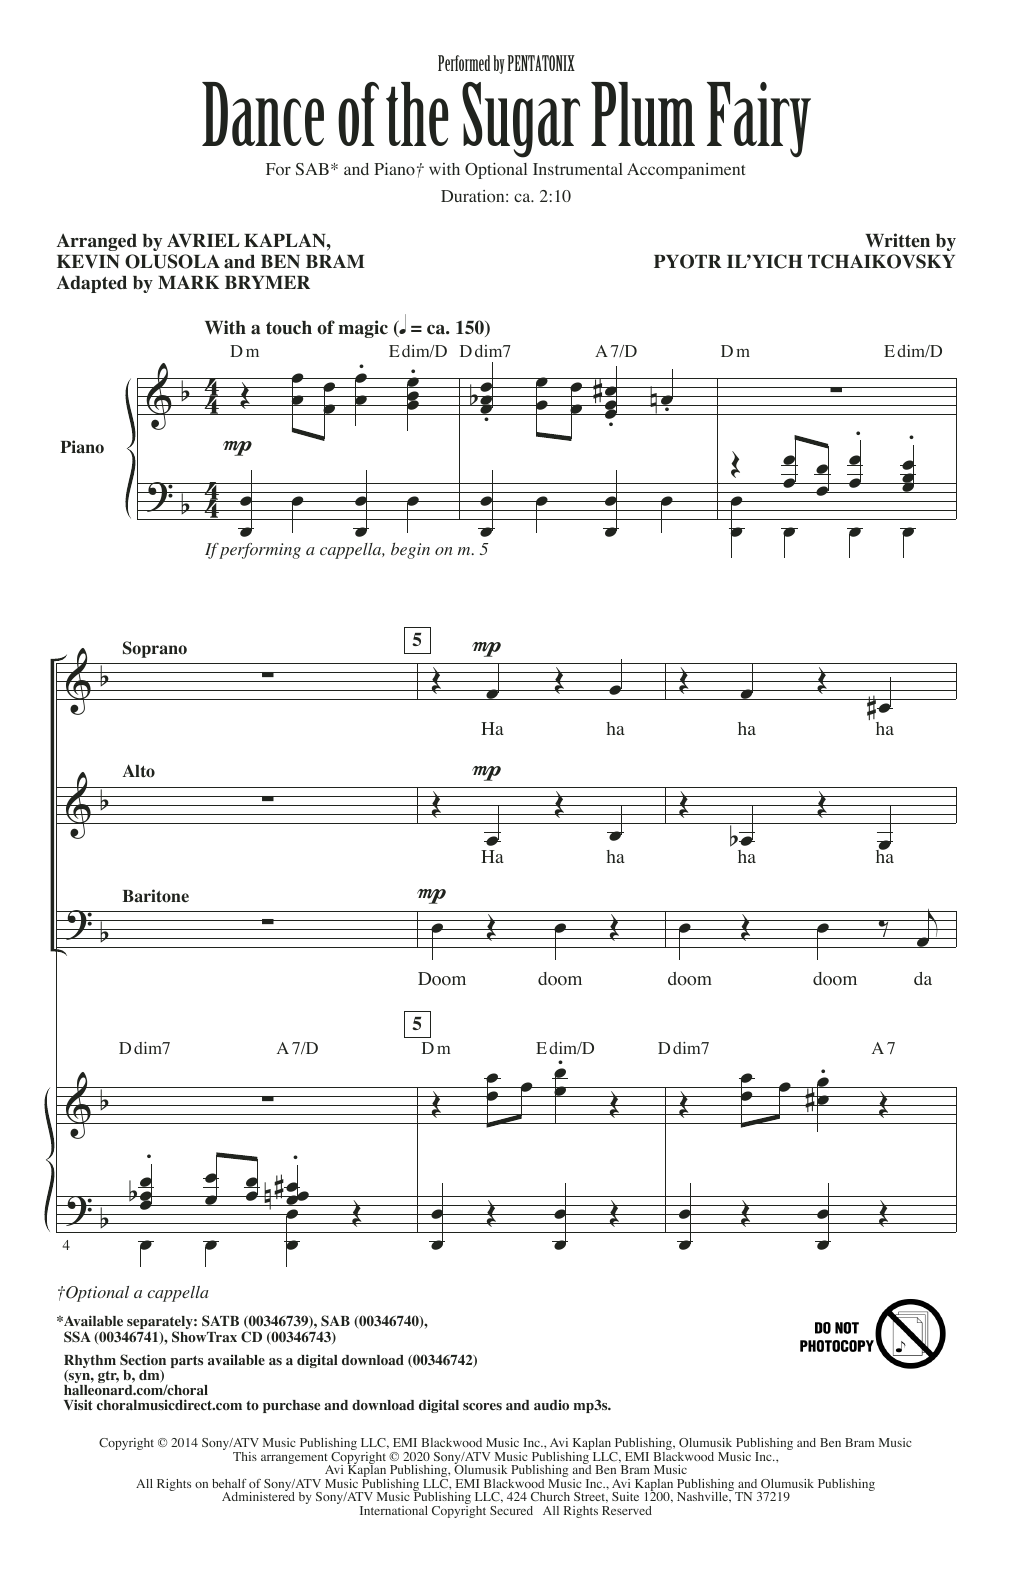 Pentatonix Dance Of The Sugar Plum Fairy (arr. Mark Brymer) Sheet Music Notes & Chords for SATB Choir - Download or Print PDF